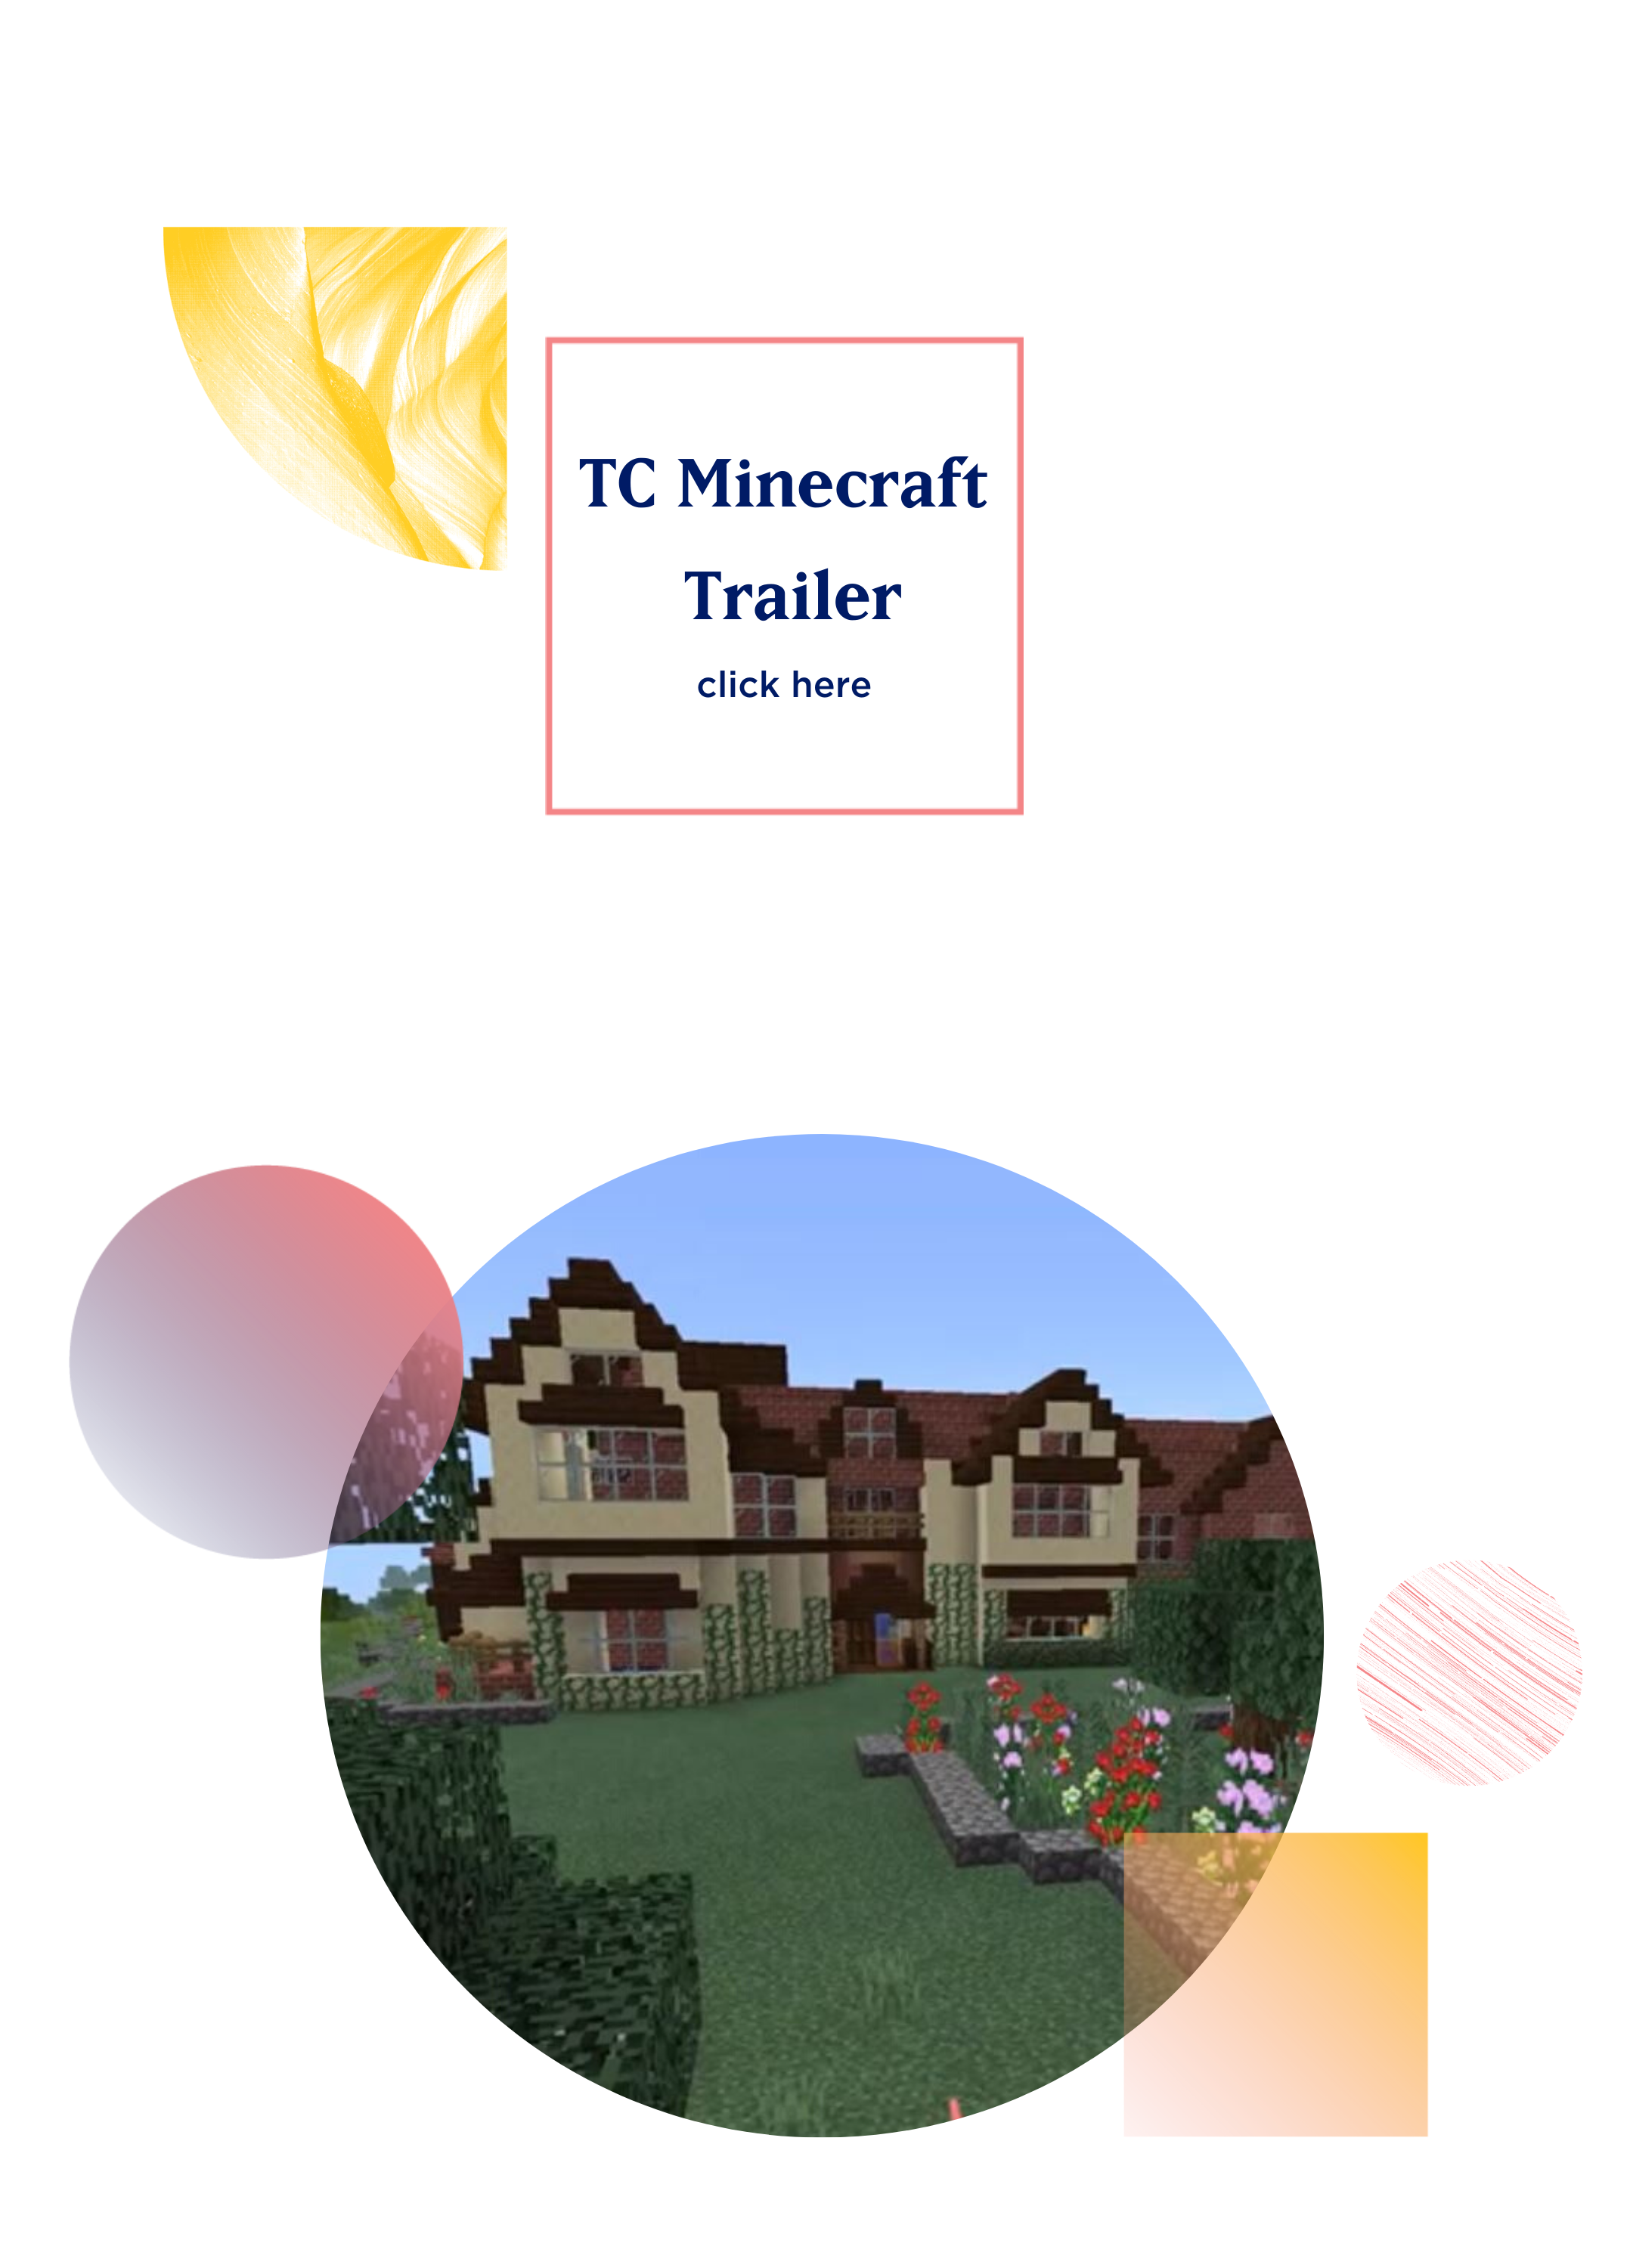 tc minecraft trailer image